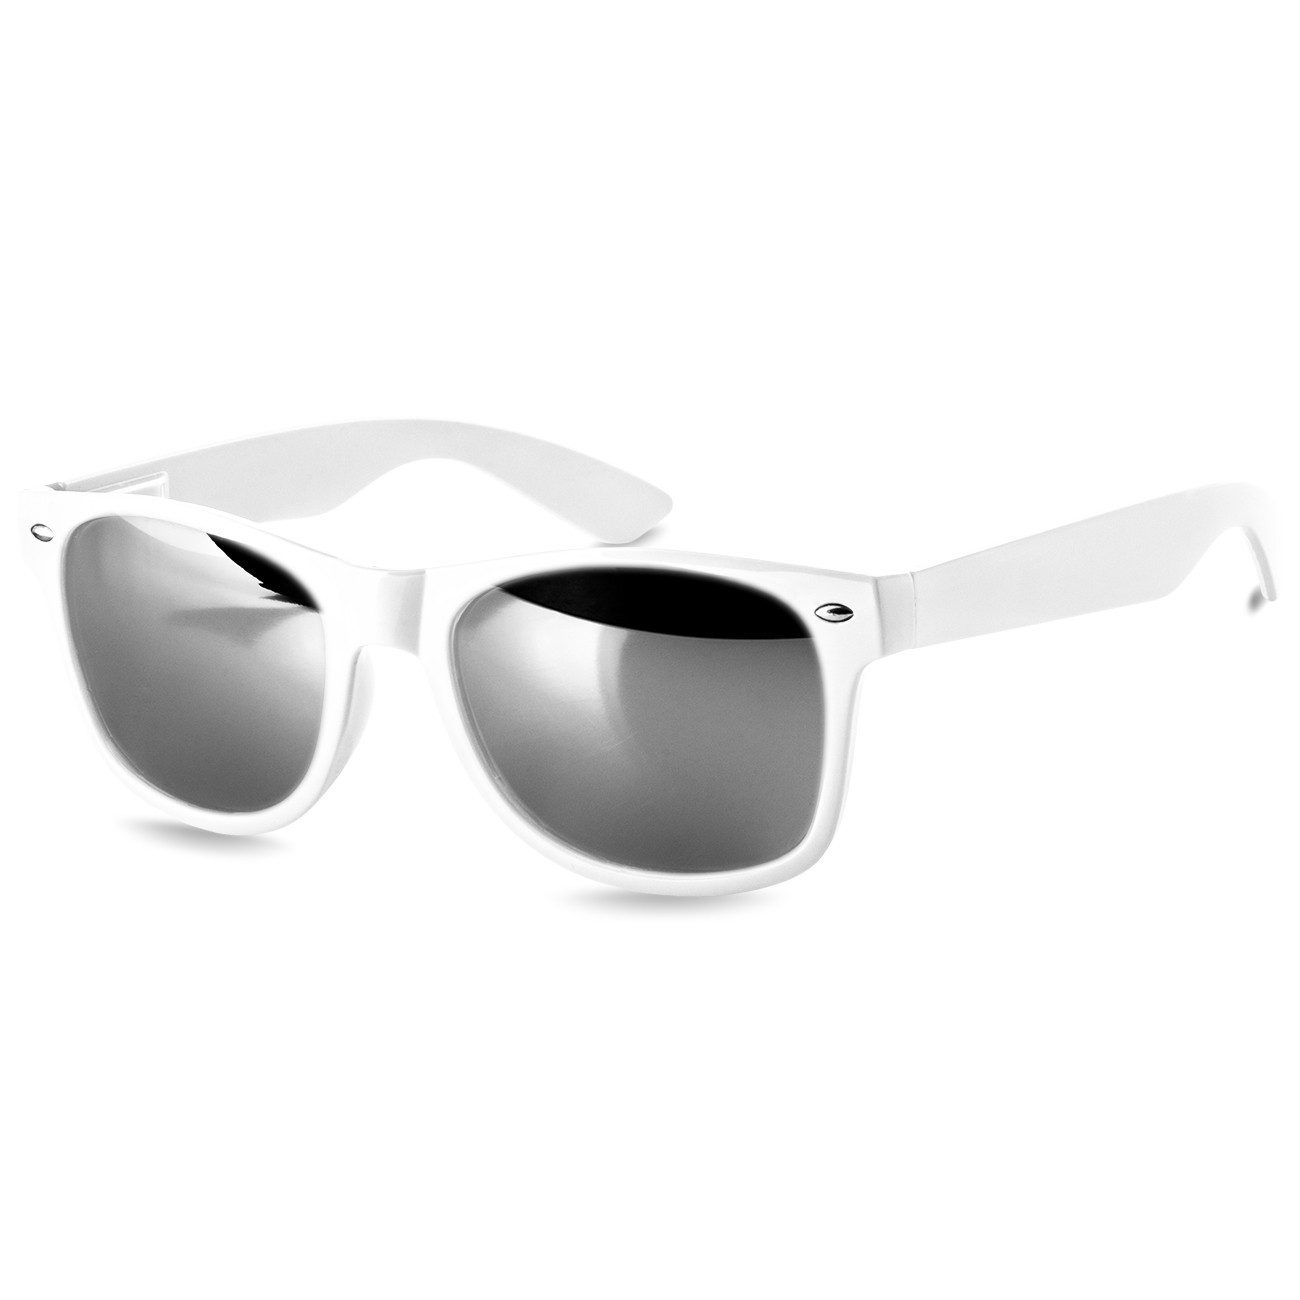 Caspar Sonnenbrille SG030 klassische Retro Design Sonnenbrille